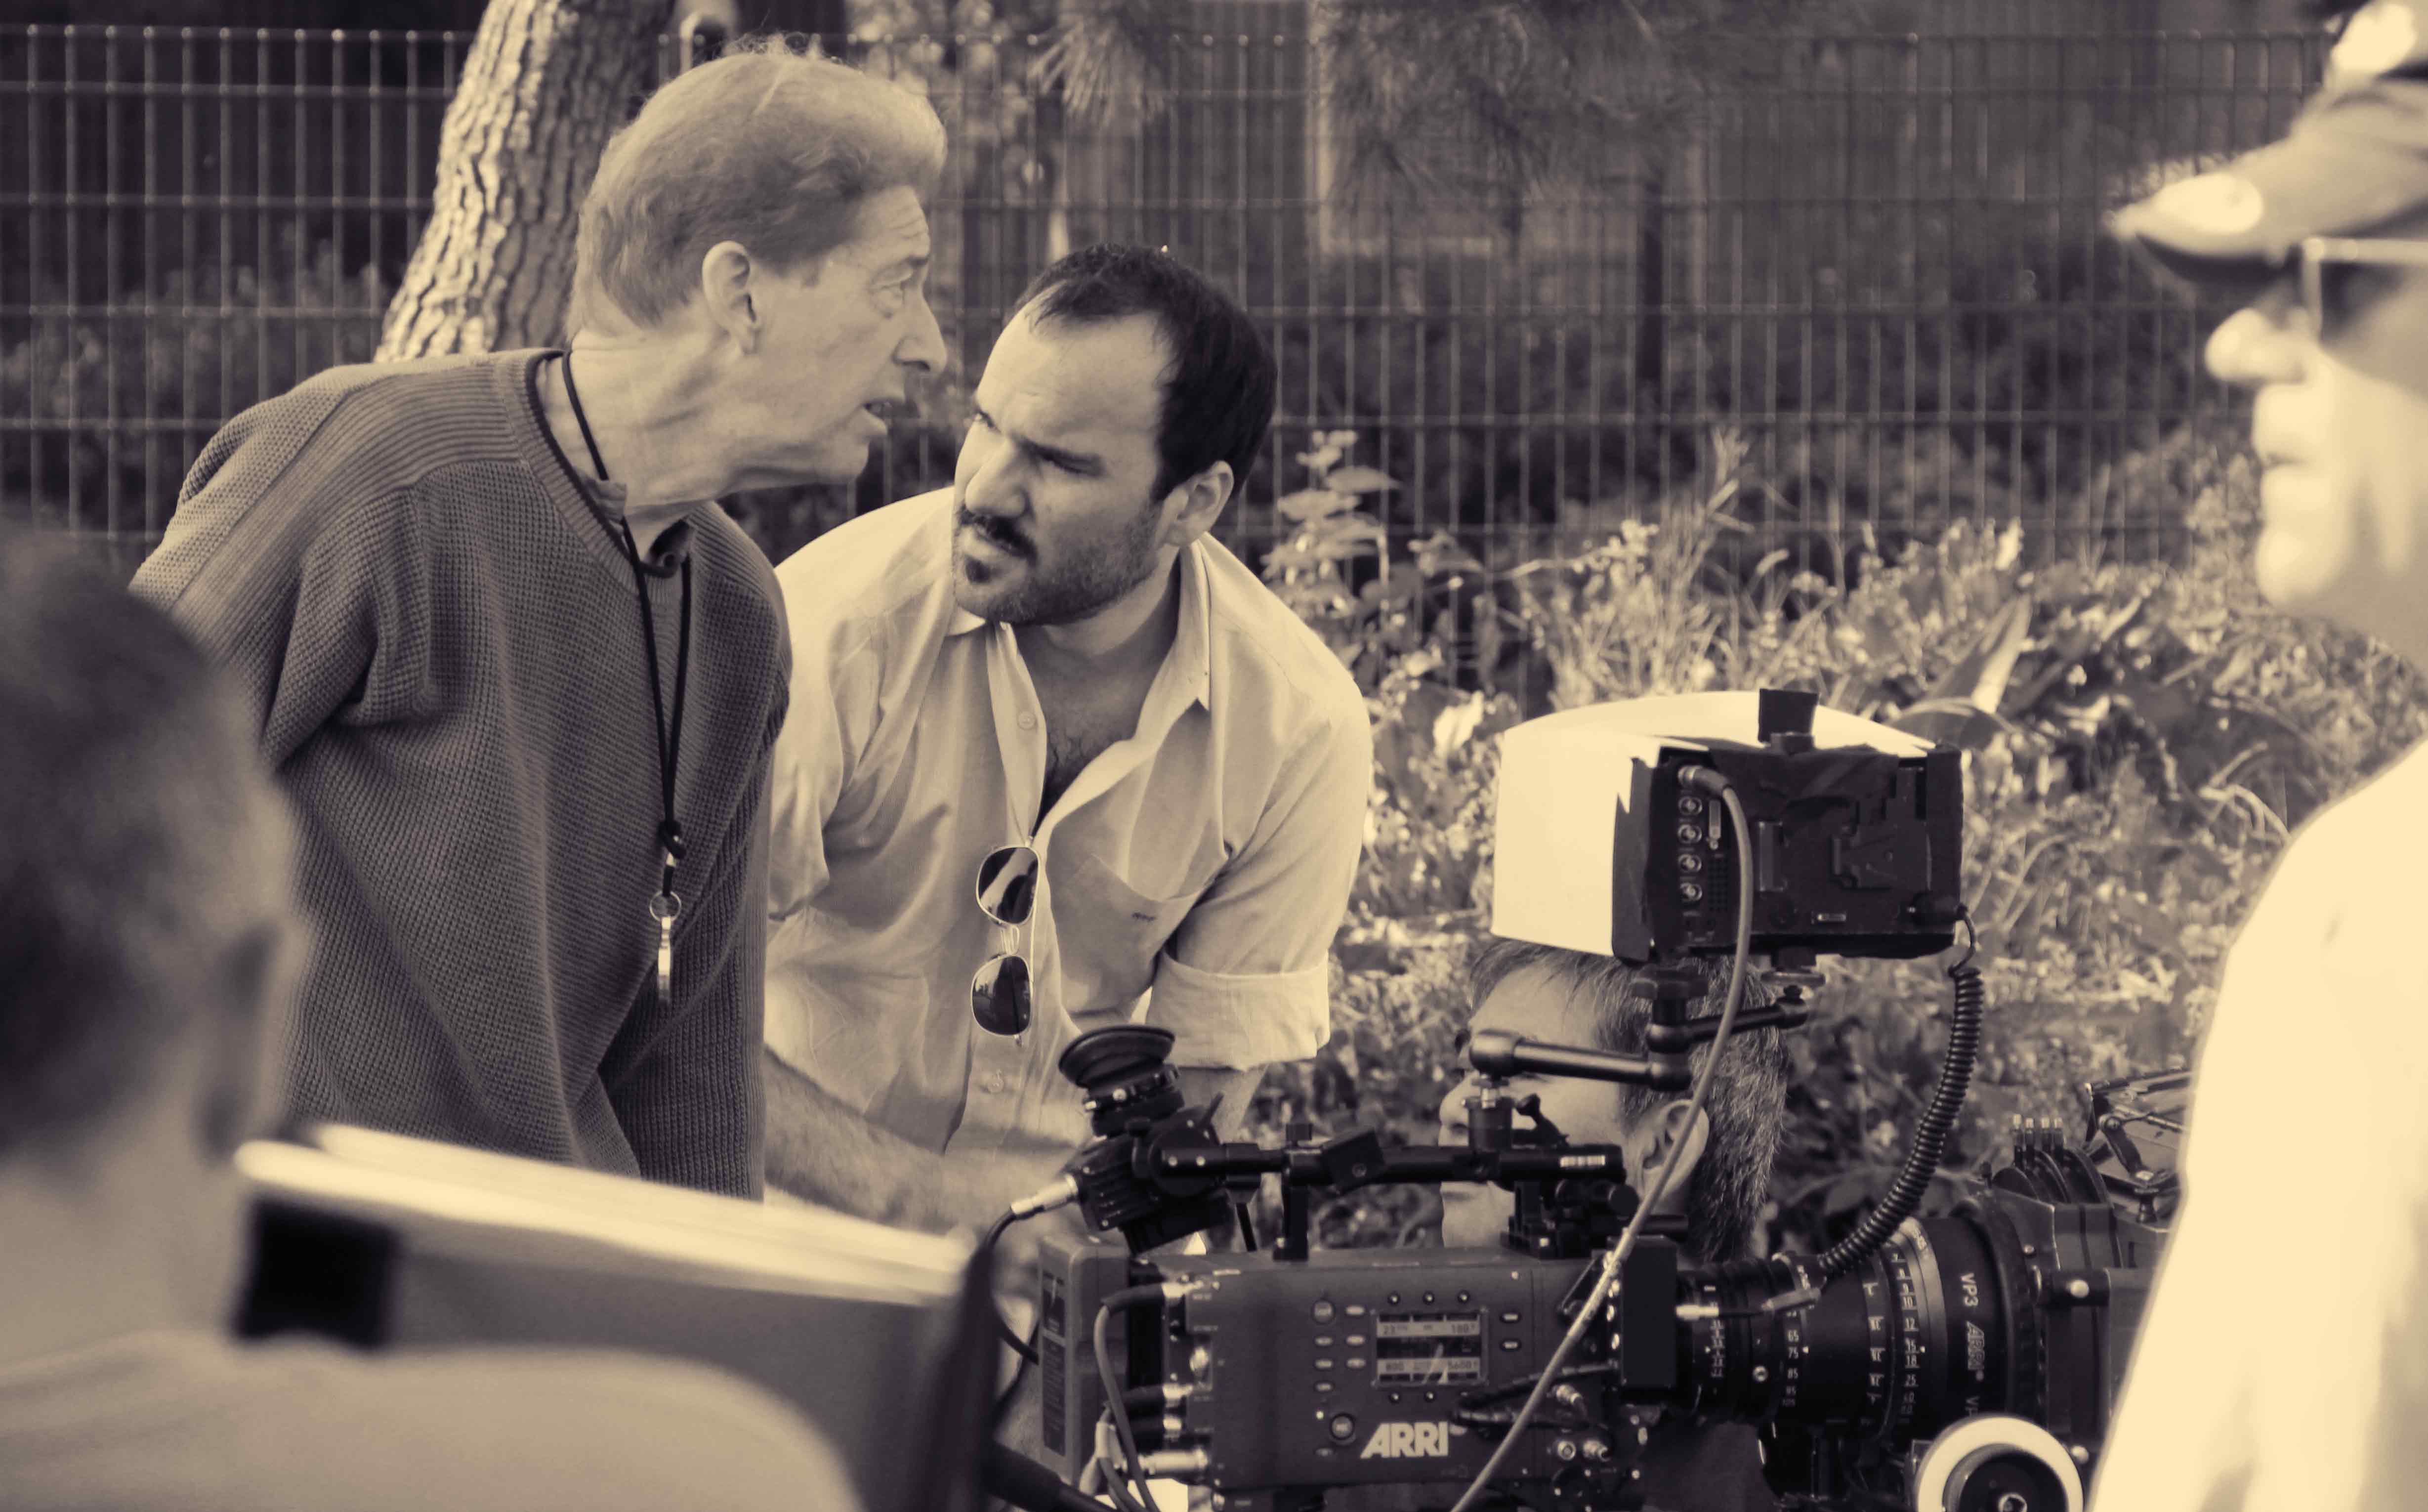 Director Pascui Rivas on set with cinematographer Frederick Elmes